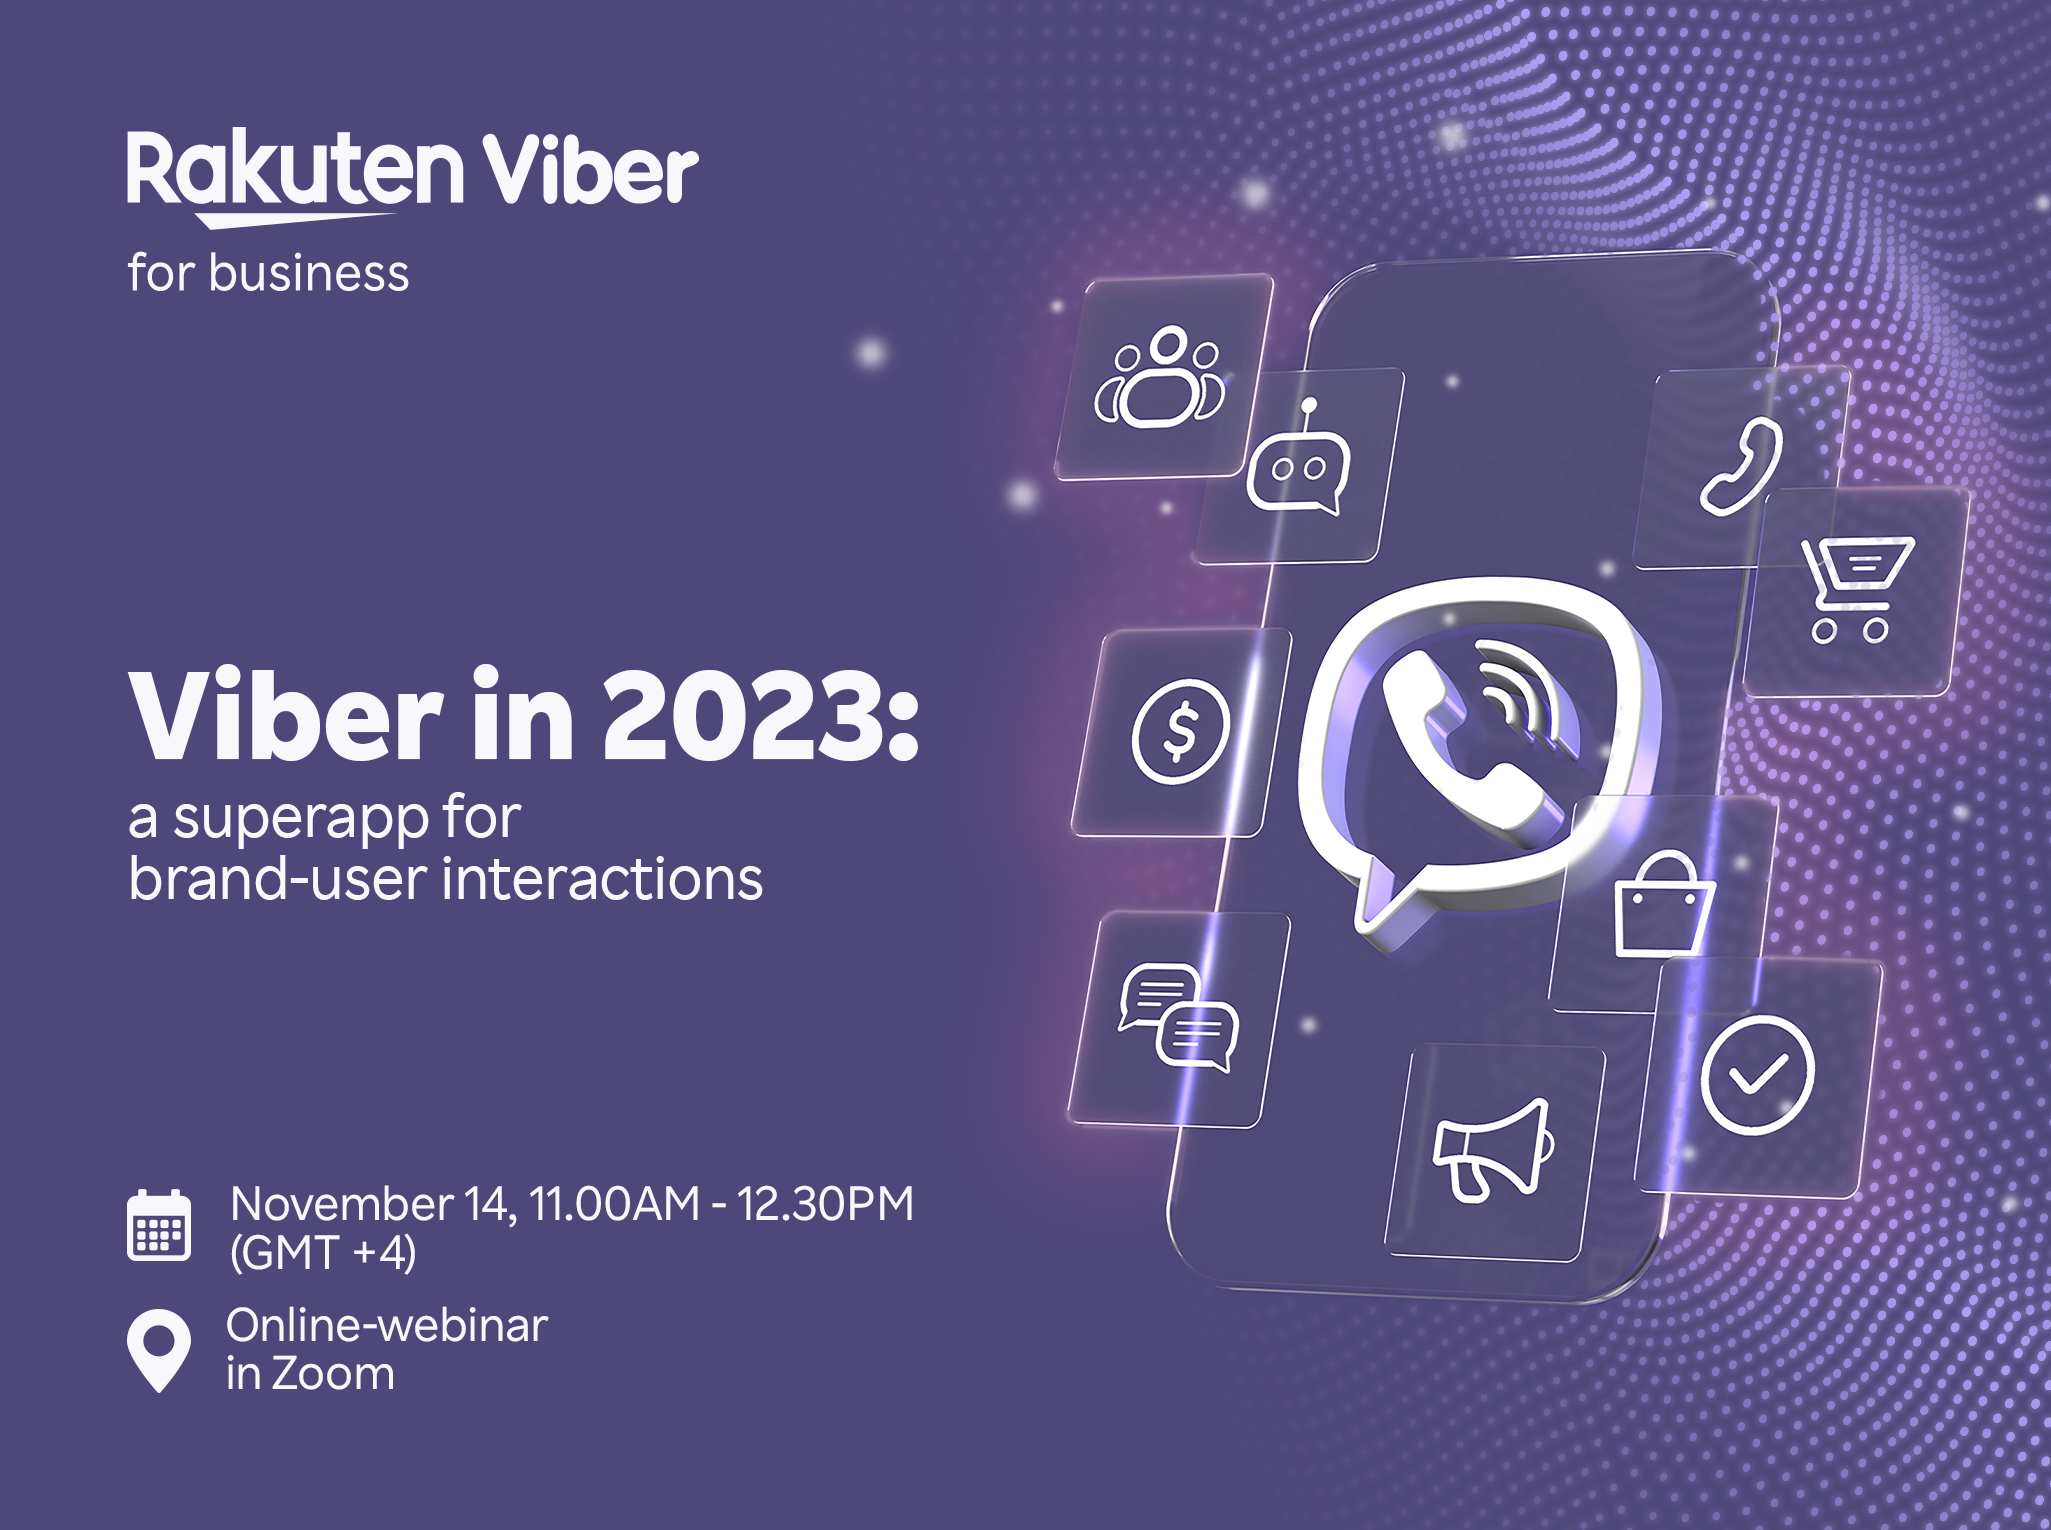 Rakuten Viber უფასო ონლაინ ვებინარს გამართავს „Viber 2023 წელს: სუპერ აპი ბრენდისა და მომხმარებლის ურთიერთობისთვის“